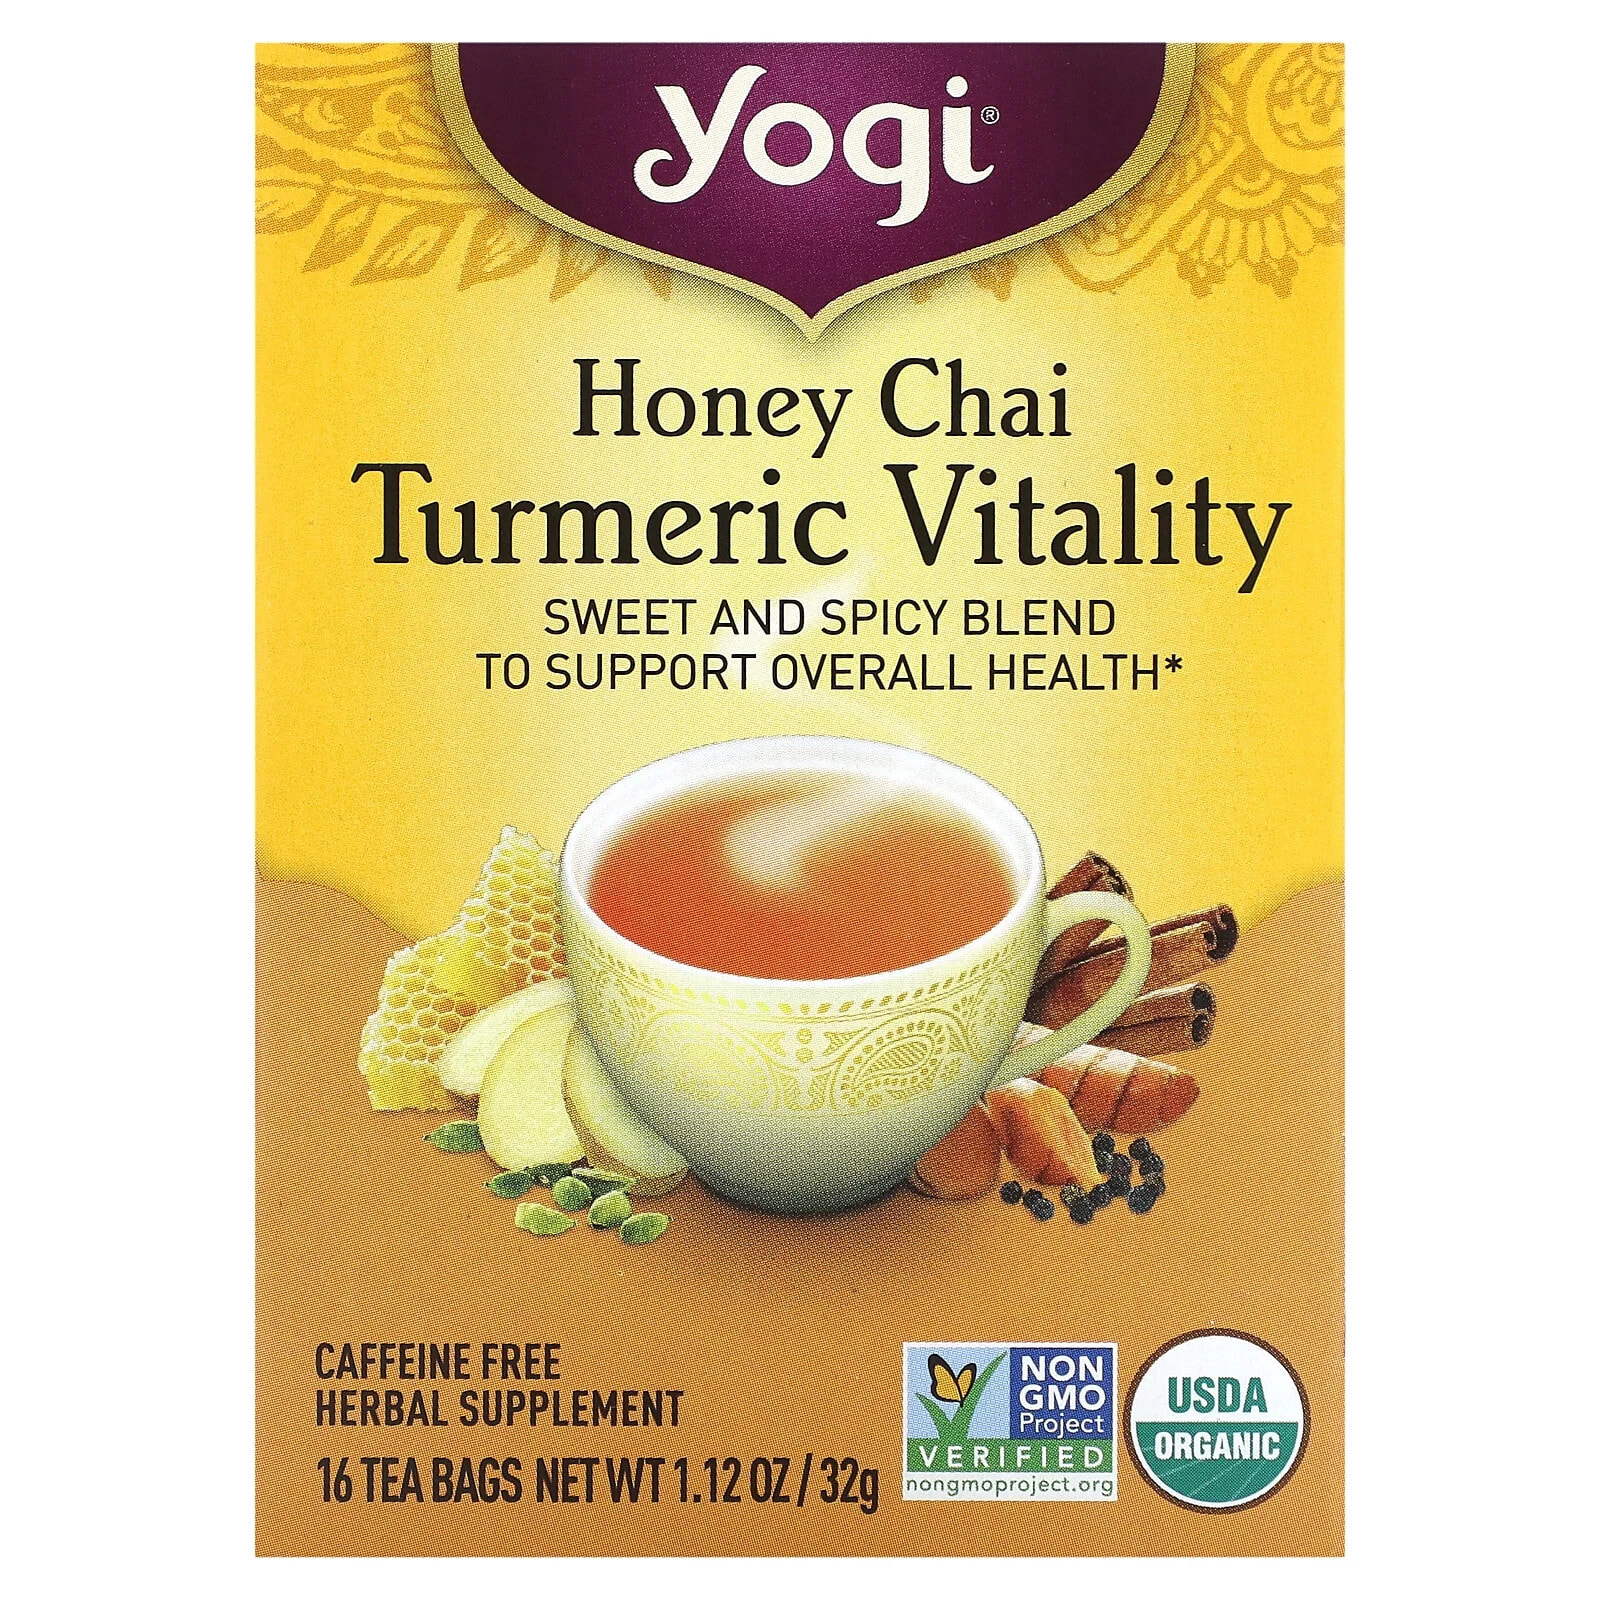 Yogi Tea, Sweet Ginger Citrus Turmeric Vitality, без кофеина, 16 чайных пакетиков, 1,12 унции (32 г)